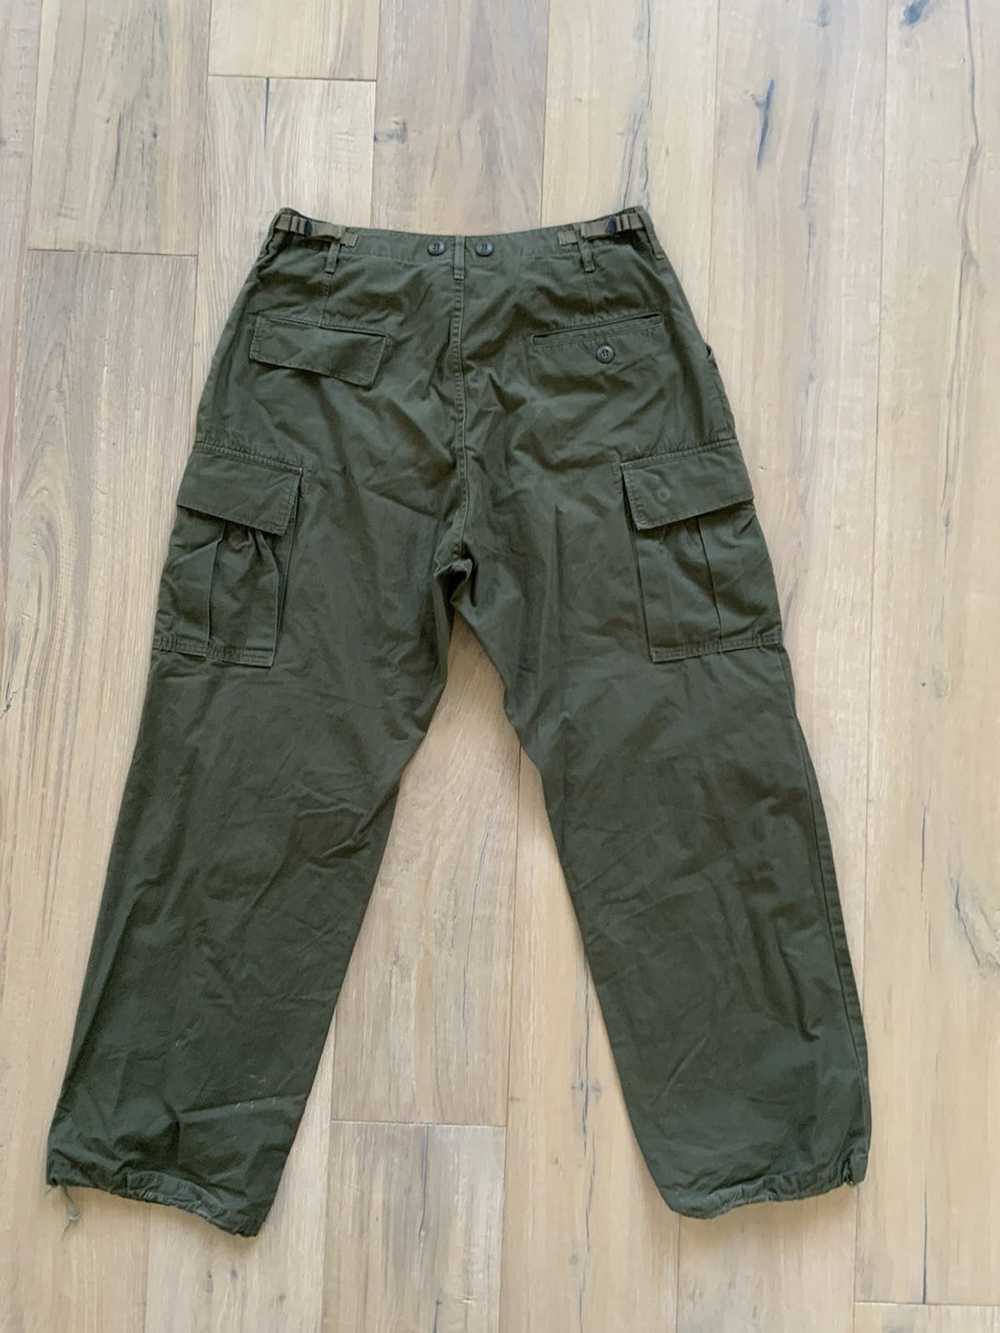 John Bull Military pants - image 7